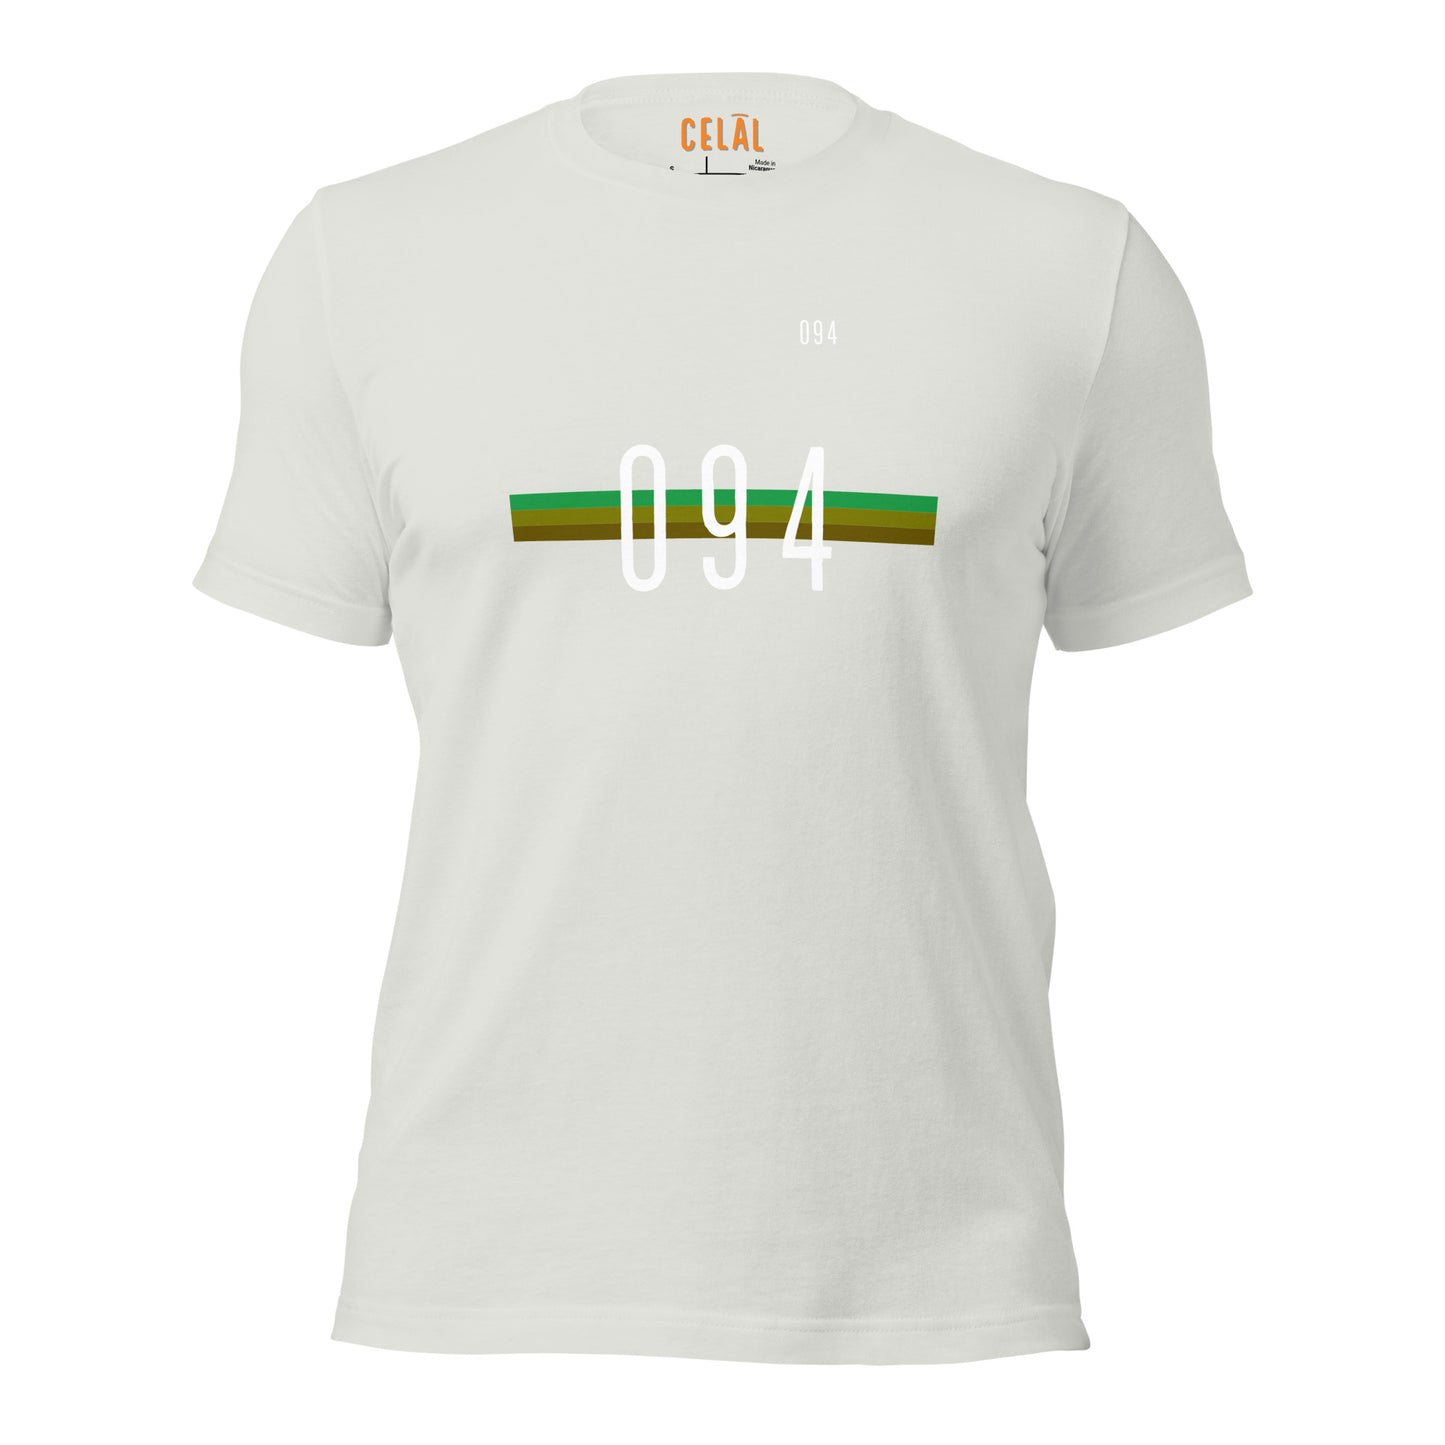 094 Unisex t-shirt